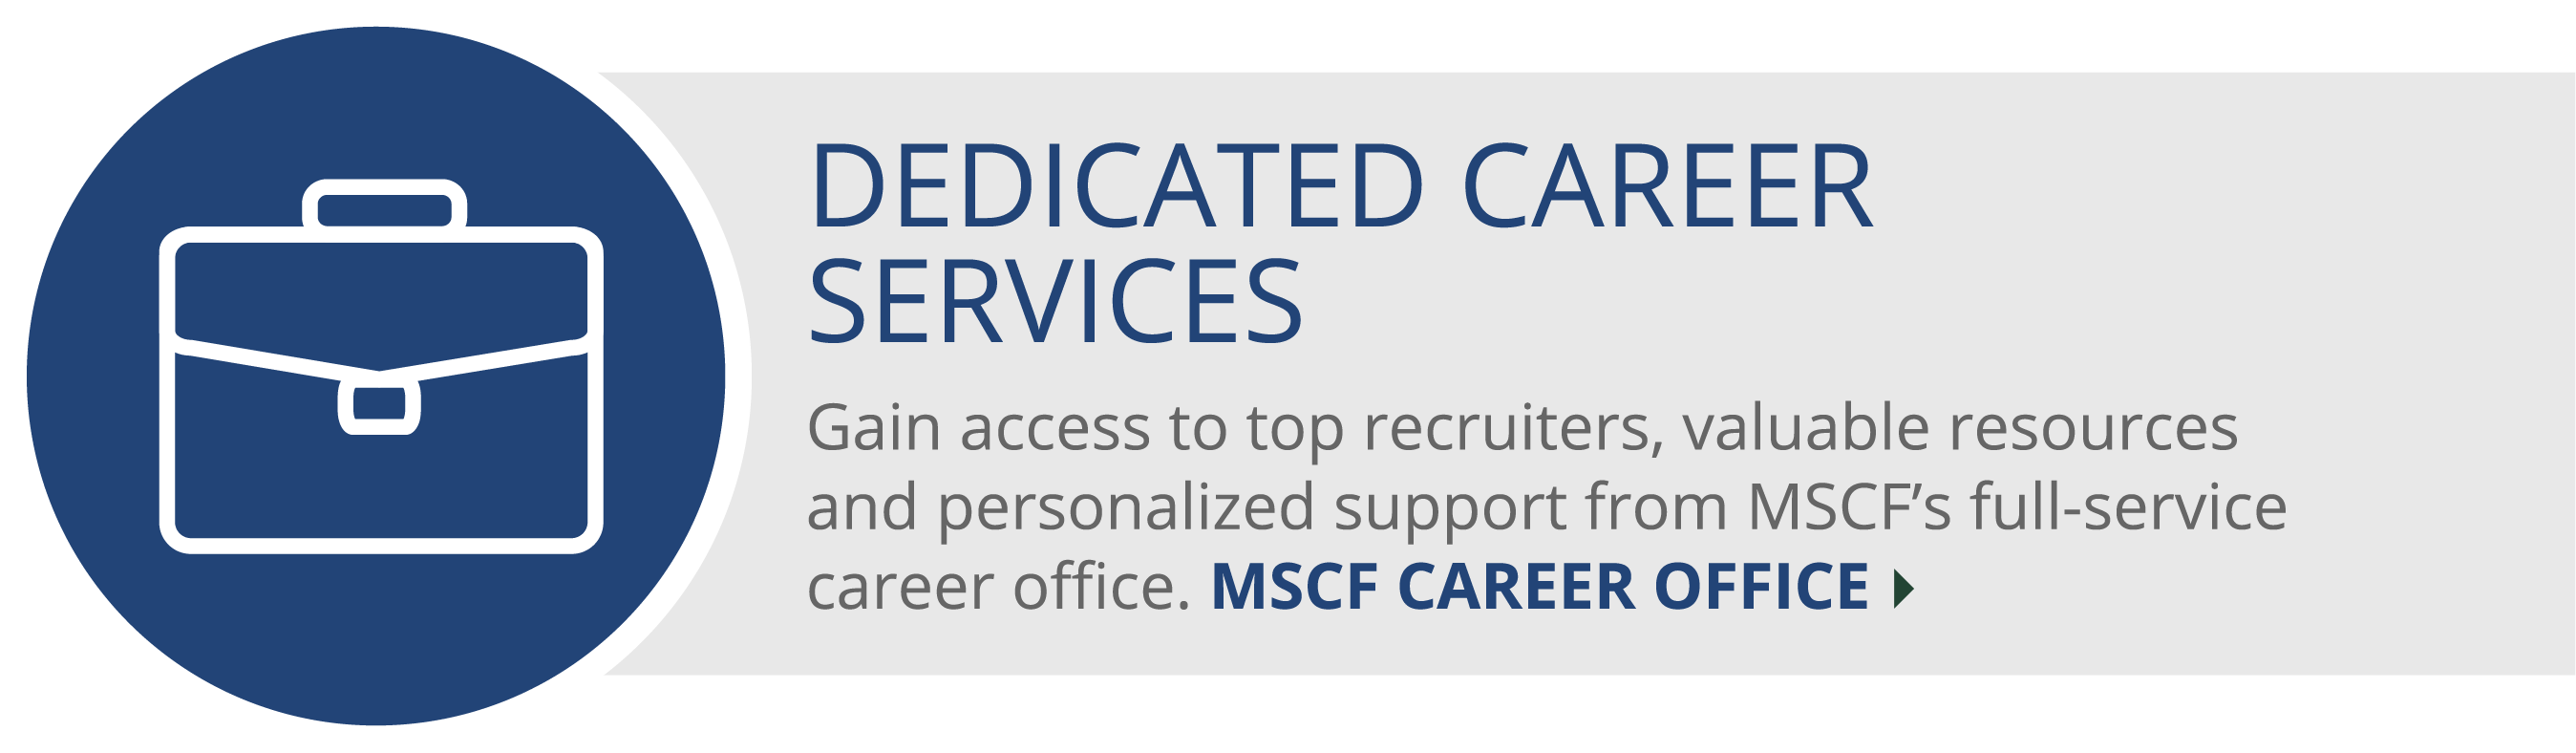 mscf_dedicated-career-services.png